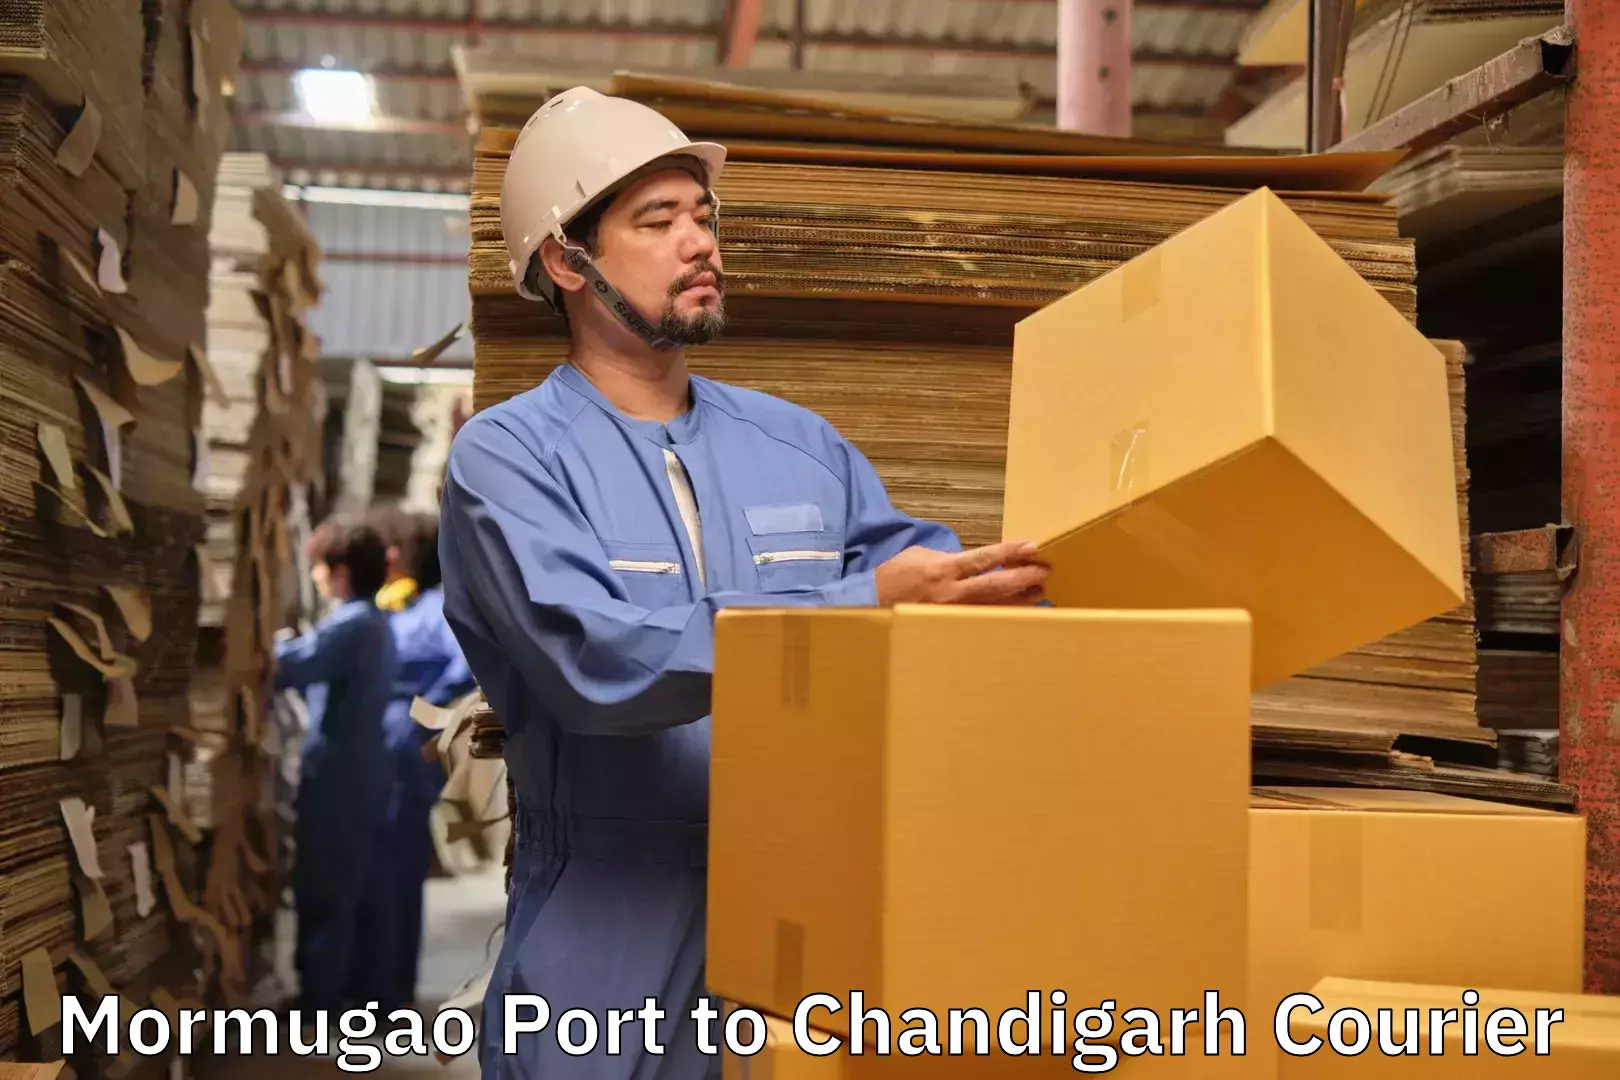 Baggage transport network Mormugao Port to Chandigarh